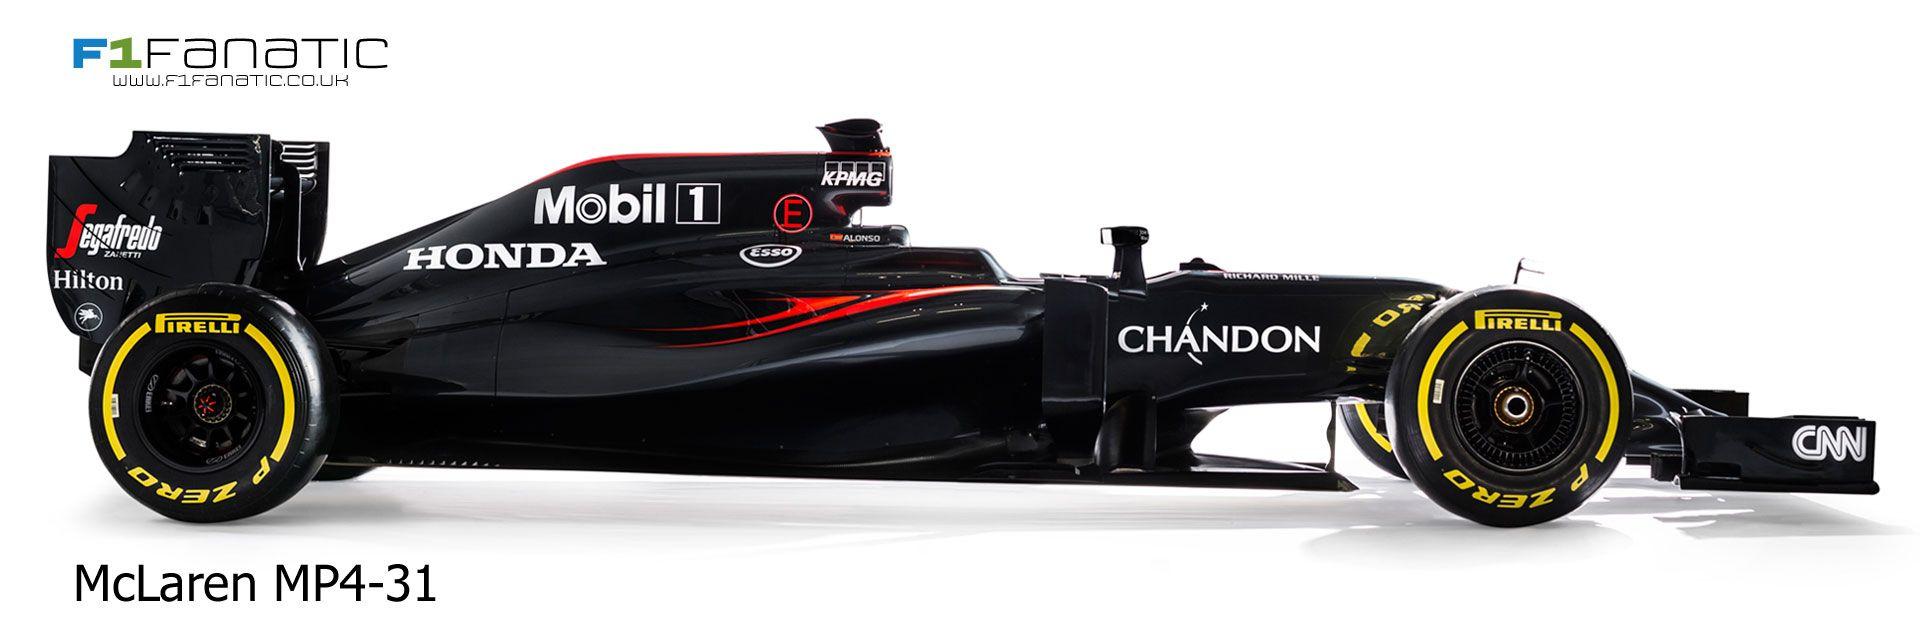 2016 McLaren F1 Logo - Compare McLaren's New MP4 31 With Their 2015 Car · RaceFans